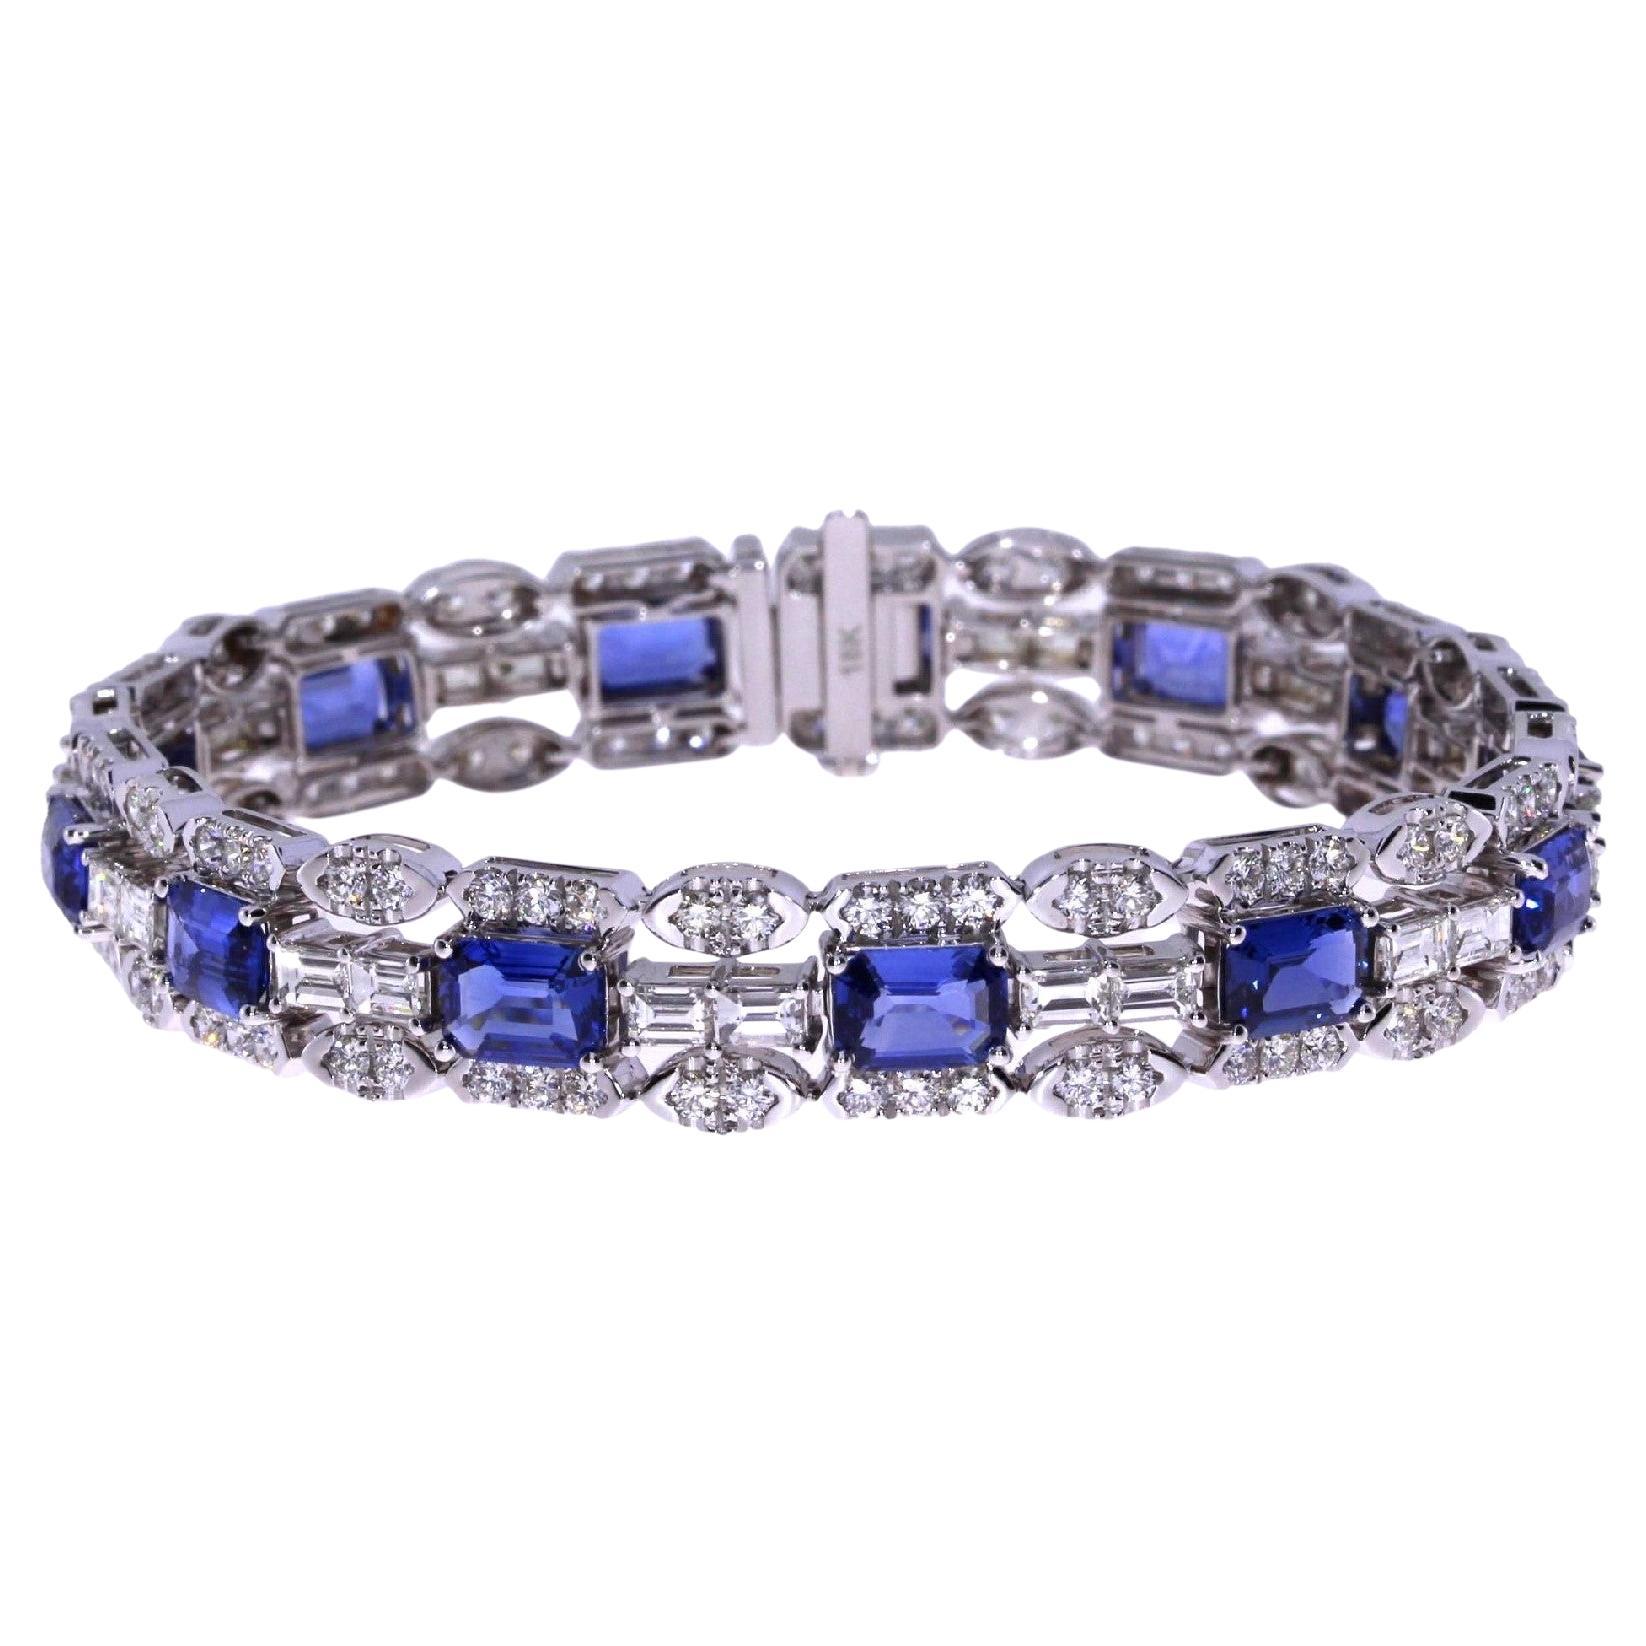 Bracelet de 13,18ct de saphir bleu de Ceylan et de diamants